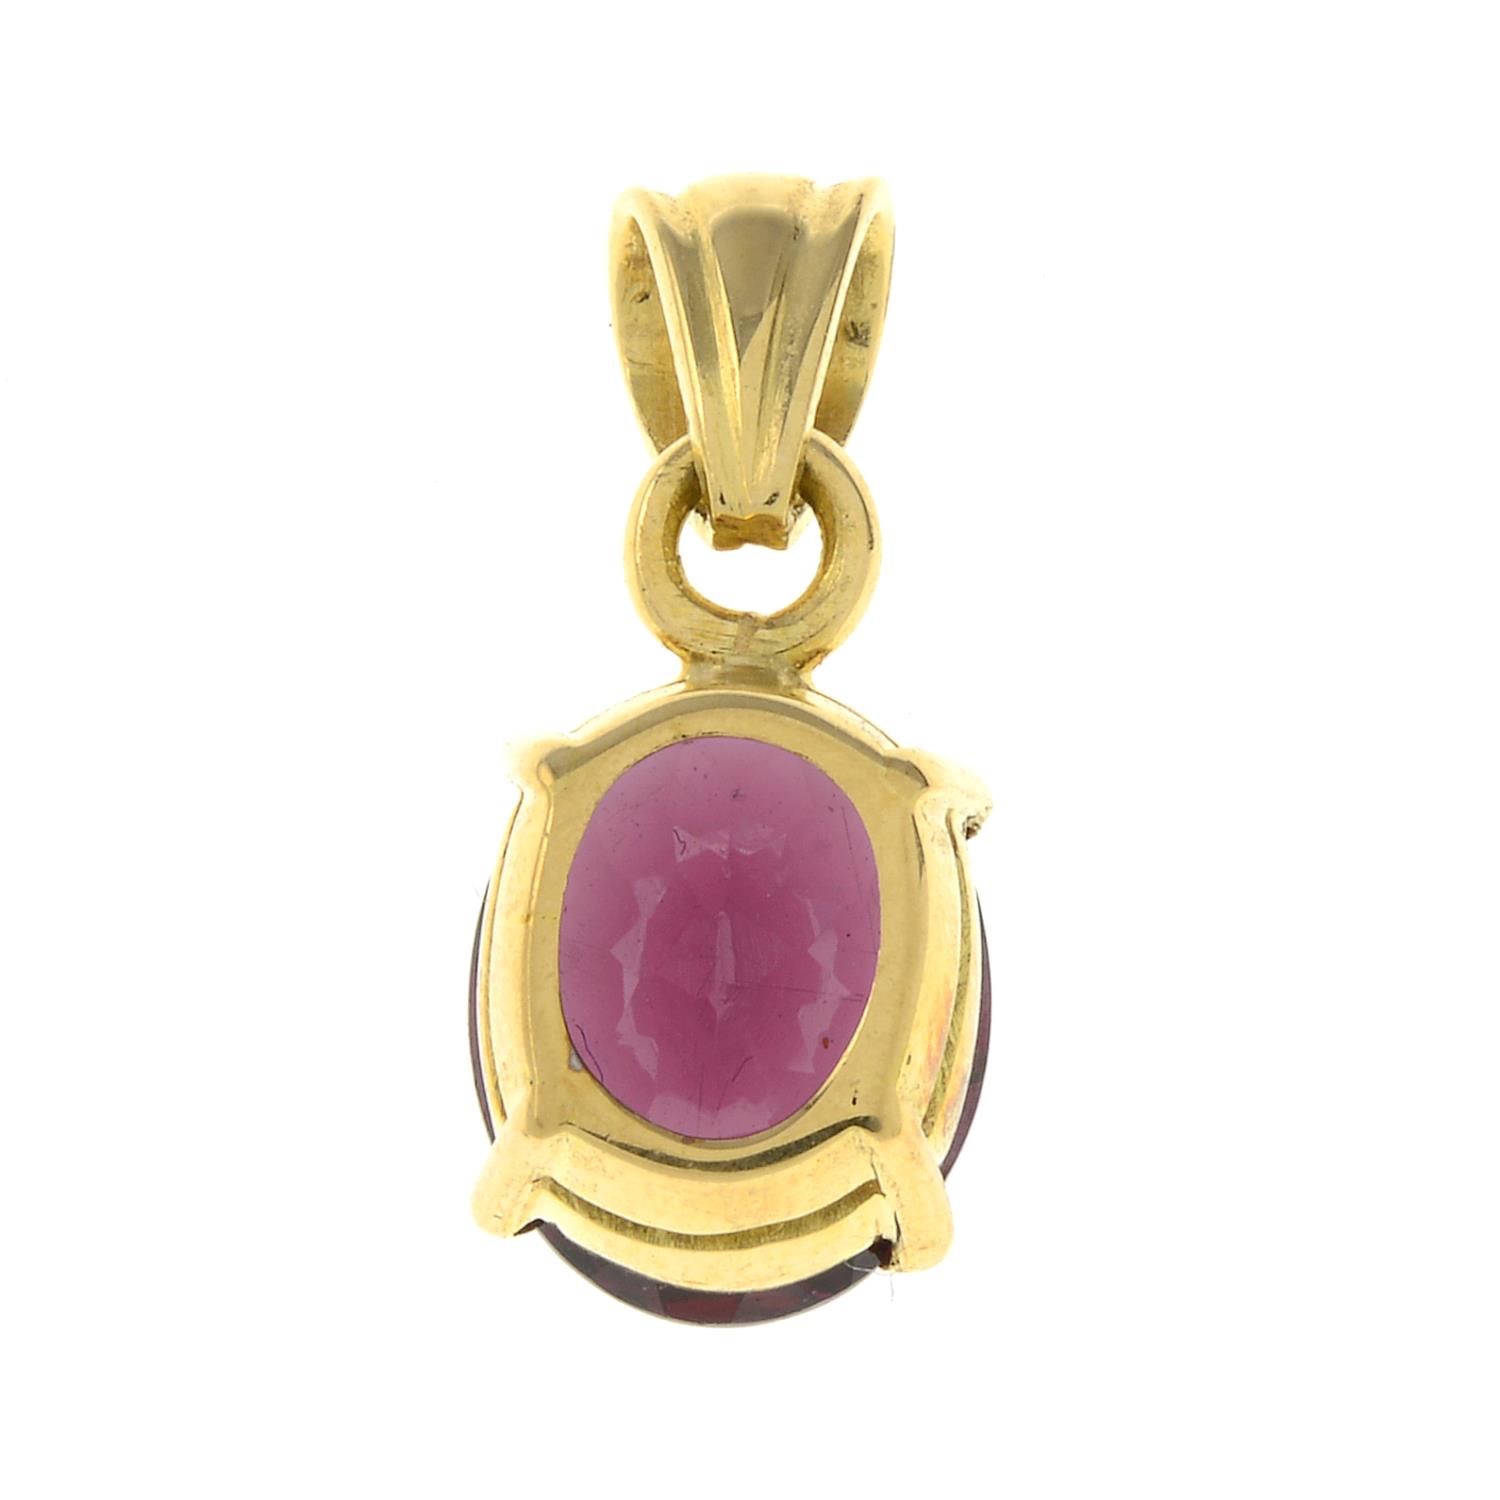 A garnet pendant.Length 1.8cms. - Image 2 of 2